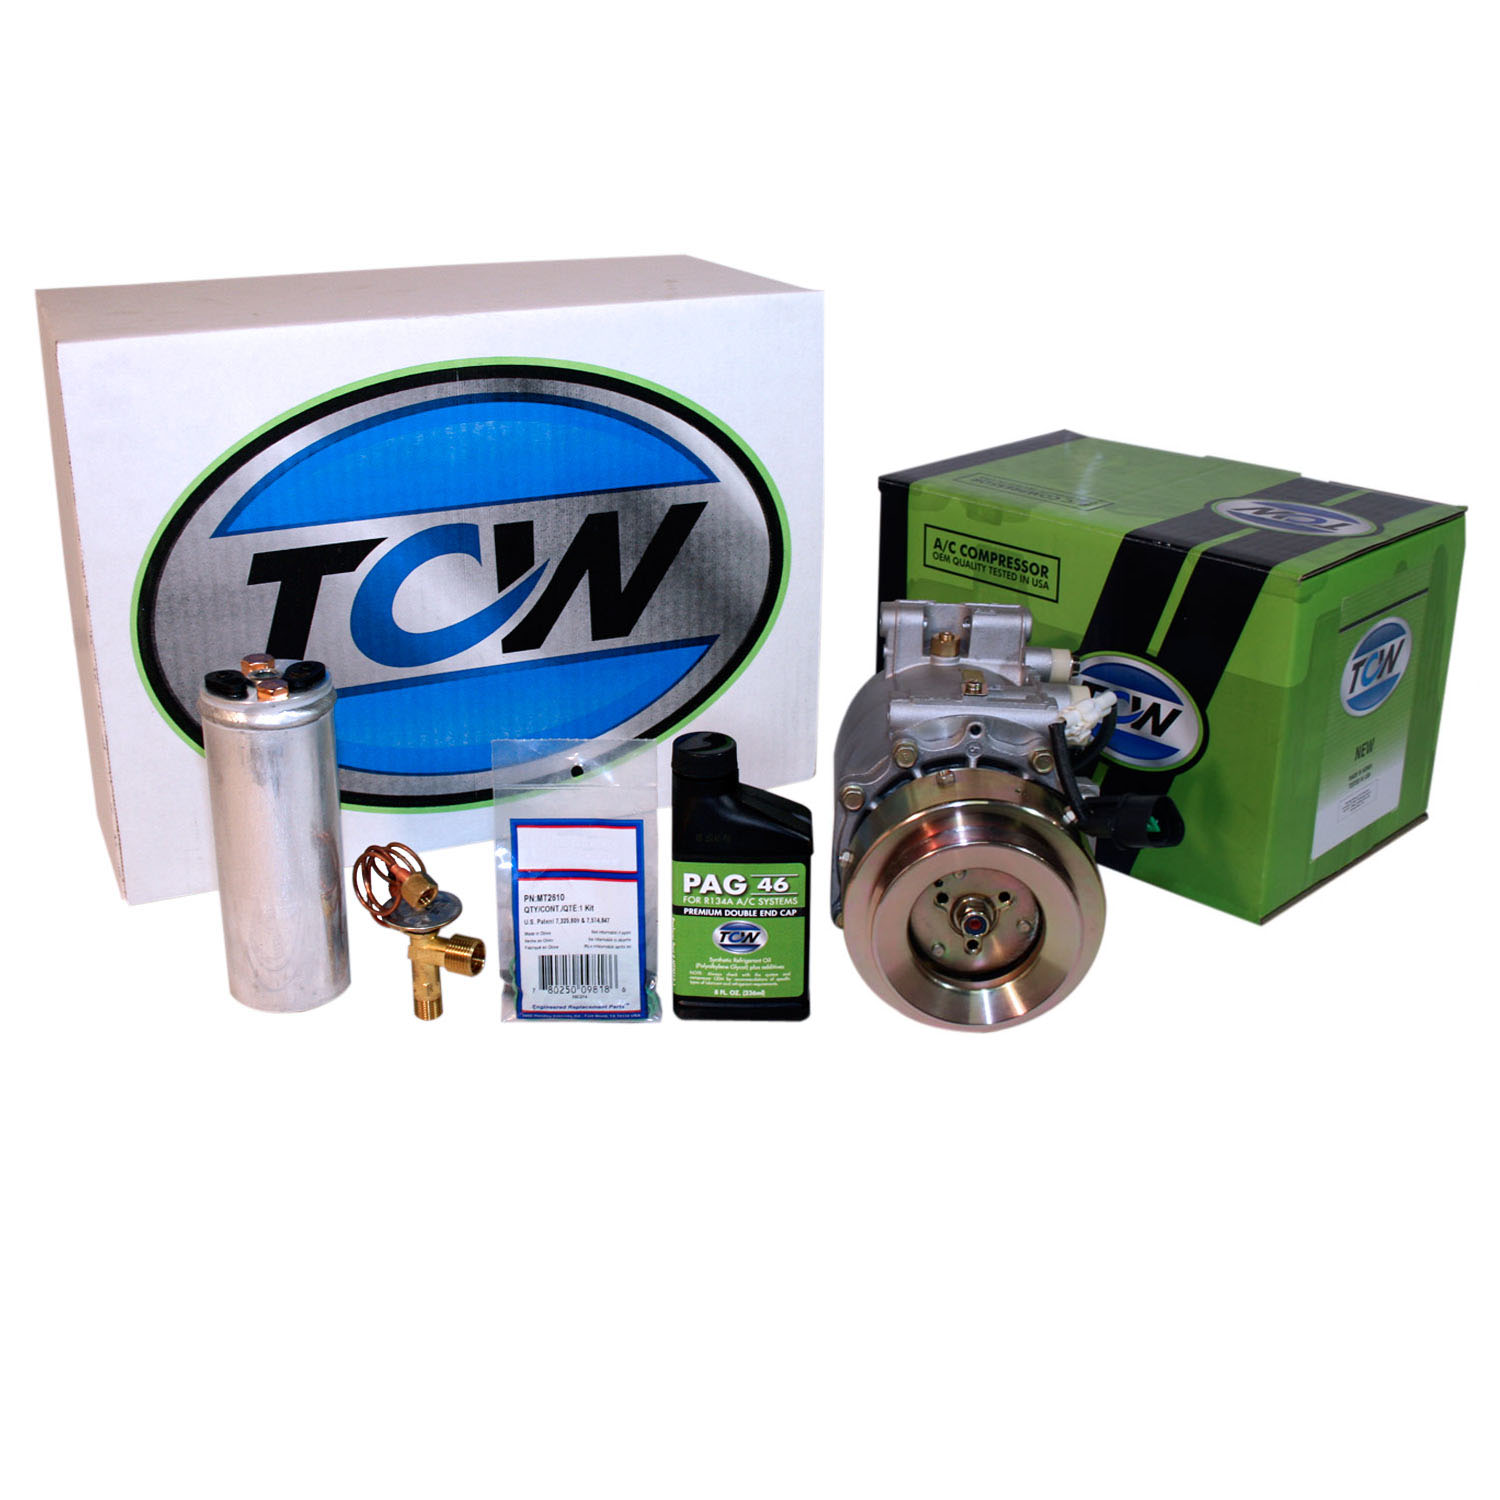 TCW Vehicle A/C Kit K1000268N New Product Image field_60b6a13a6e67c